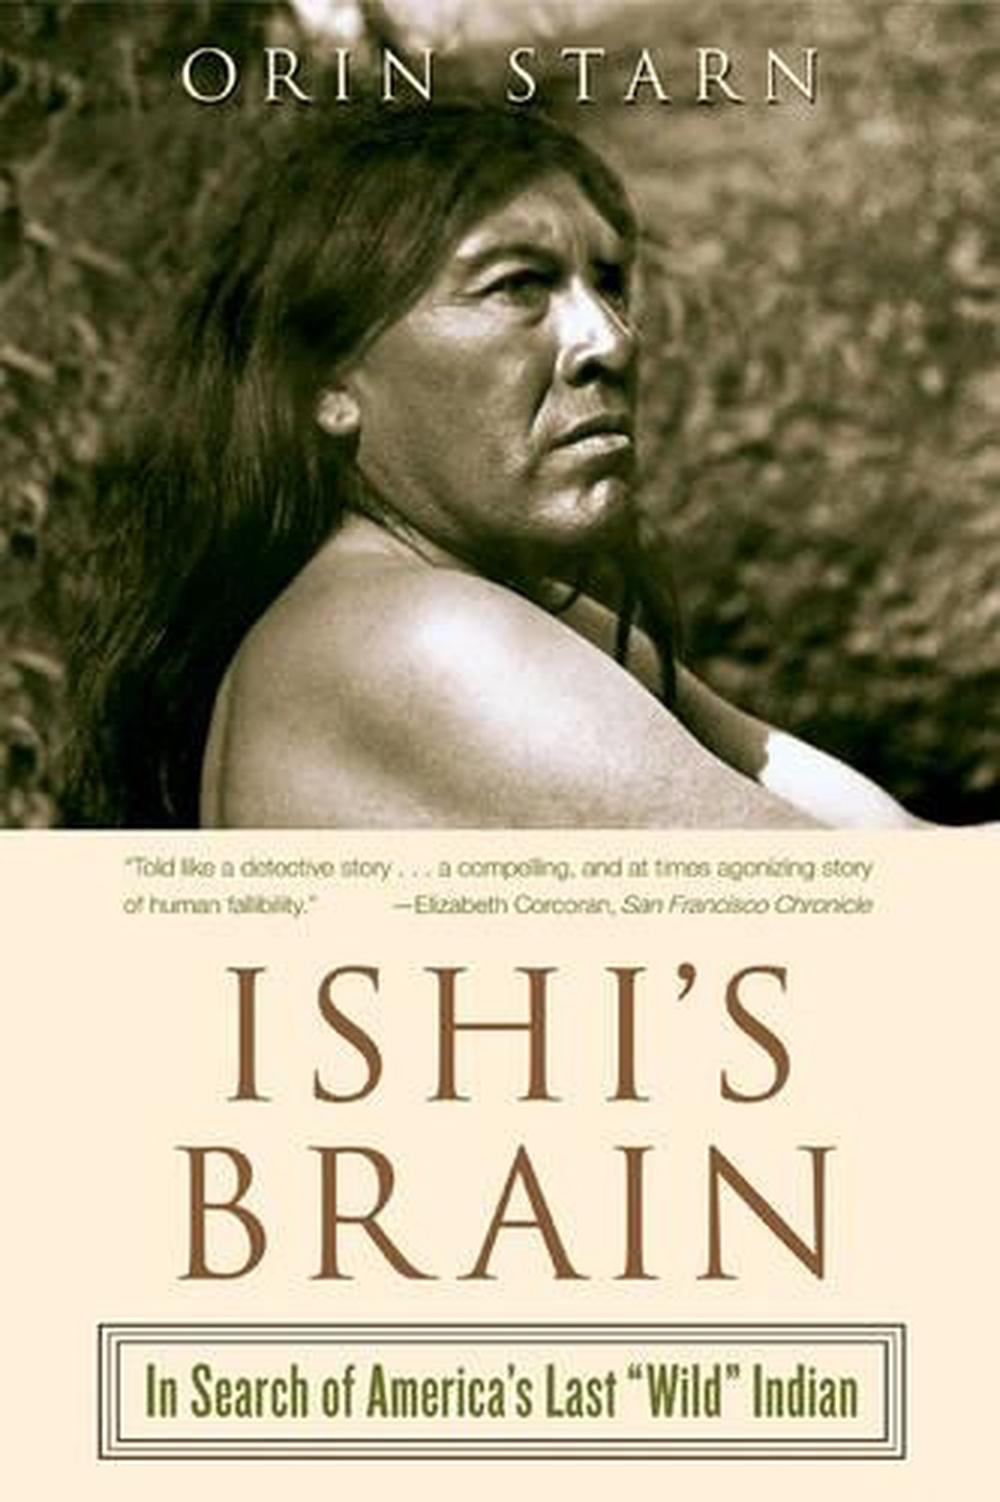 Ishi's Brain In Search of America's Last "Wild" Indian by Orin Starn (English) 9780393326987 eBay